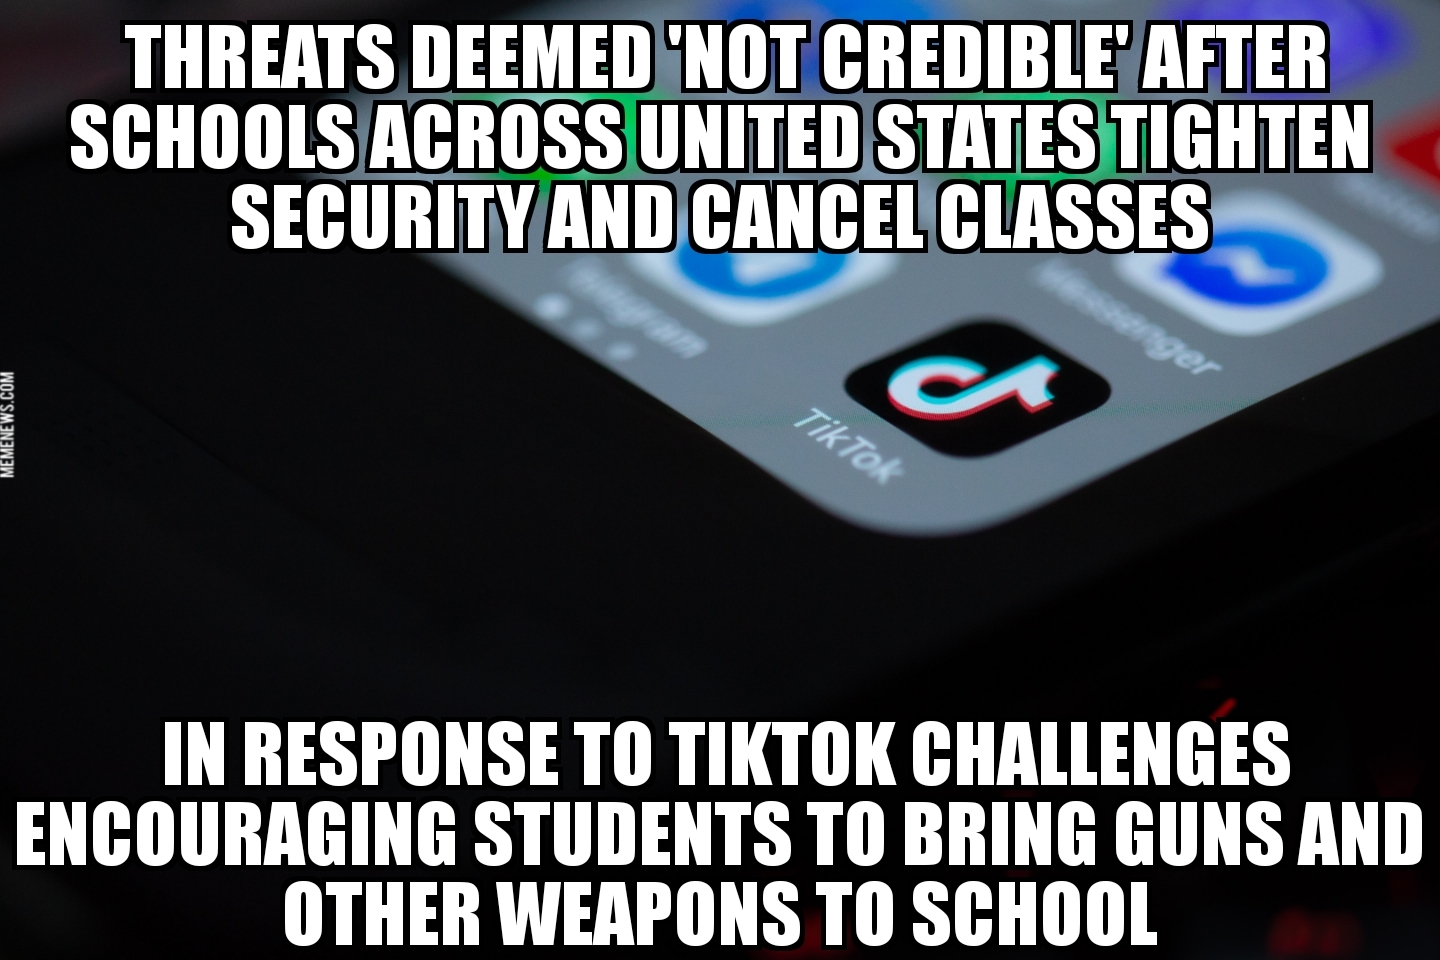 TikTok school threats deemed ‘not credible’